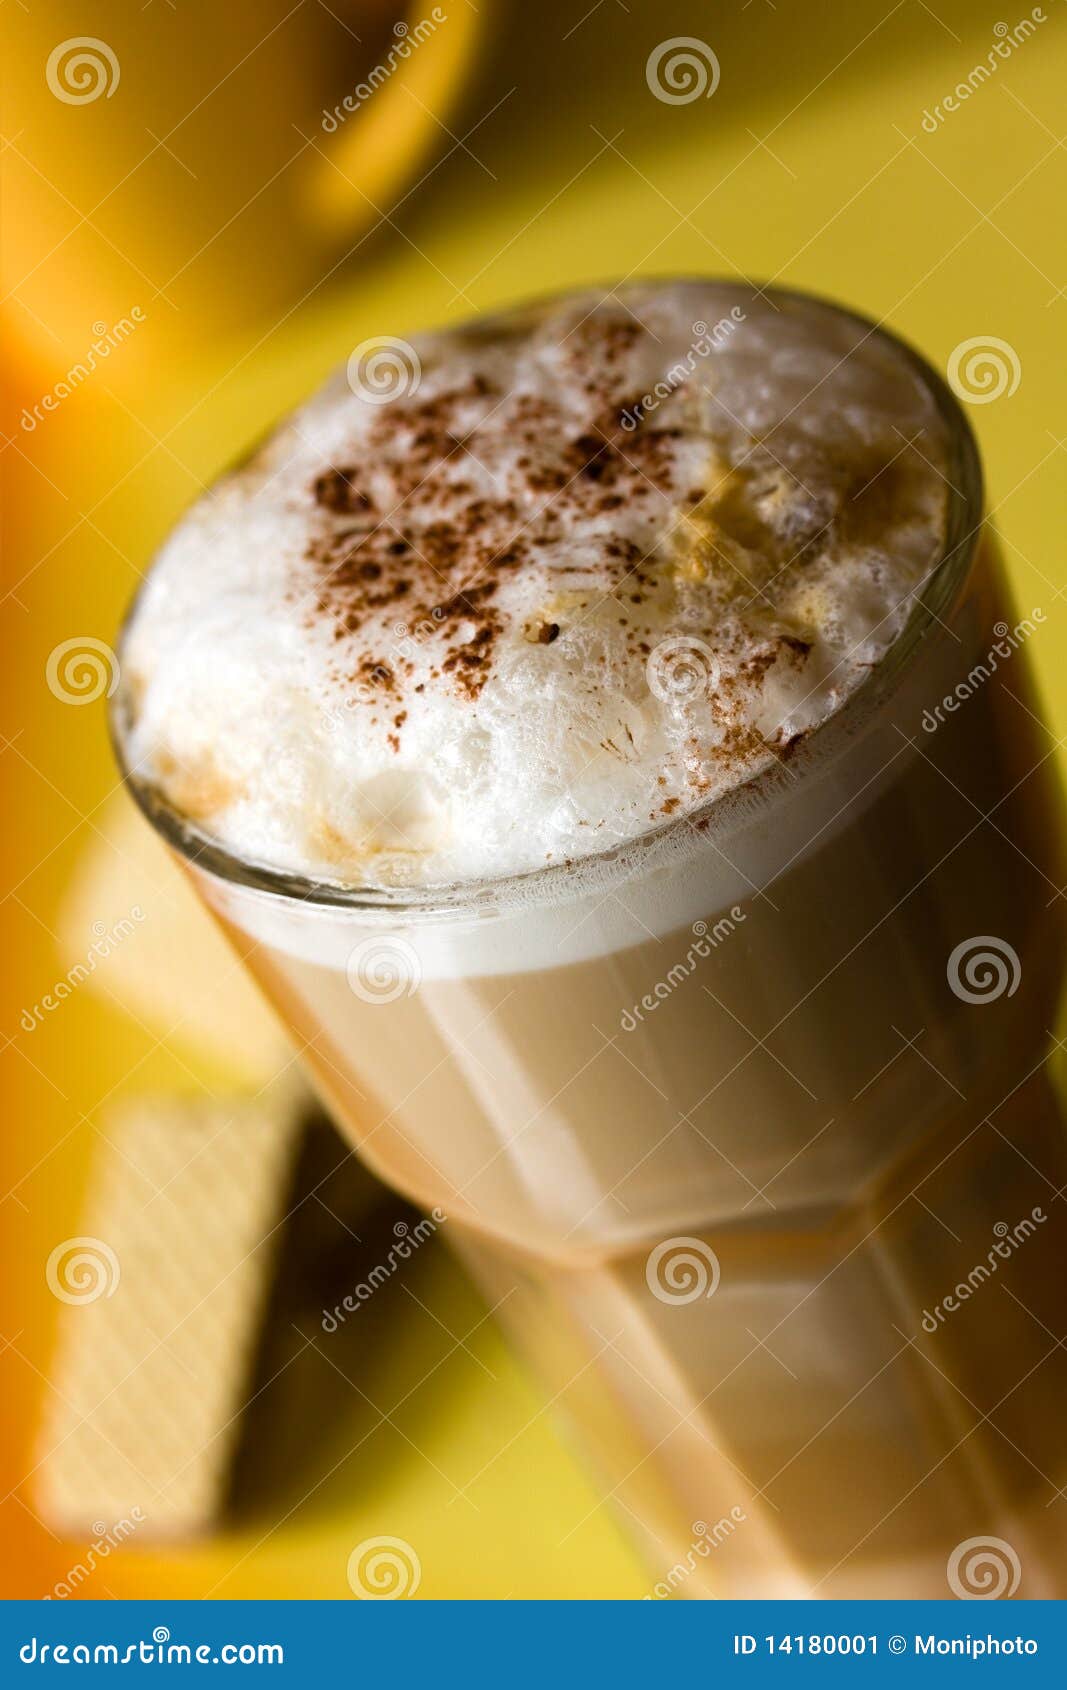 latte macchiato with frothy milk